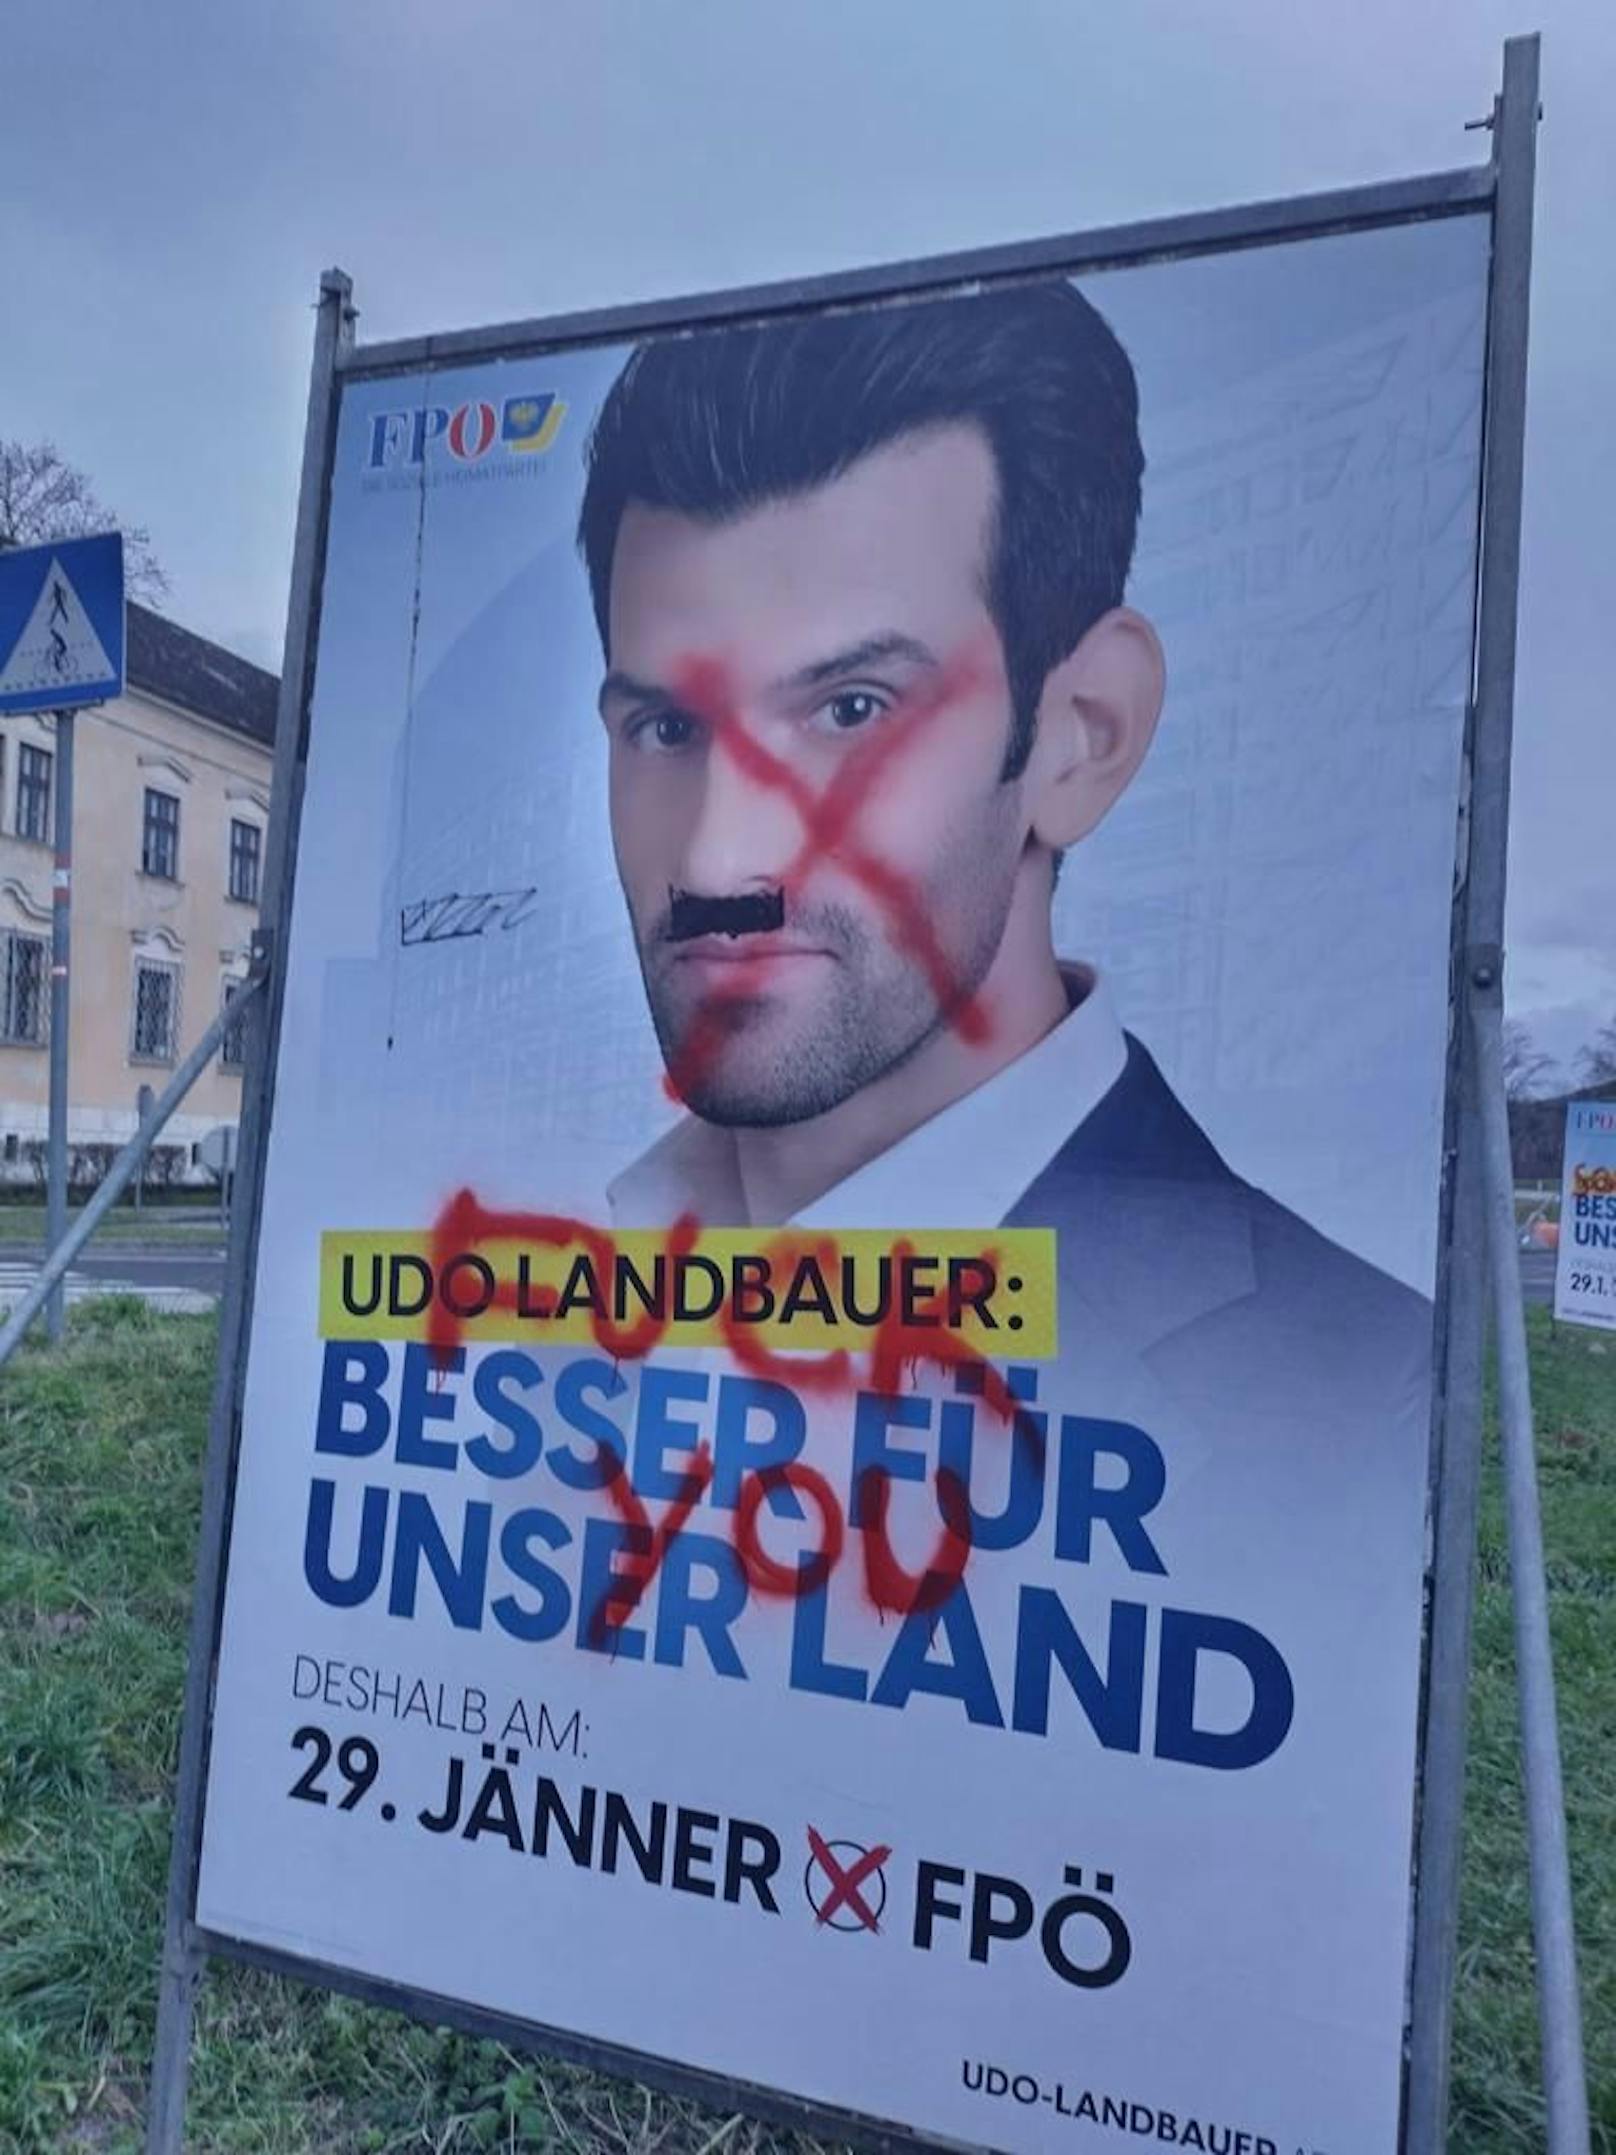 Welle der Verwüstung – Hunderte FPÖ-Plakate zerstört